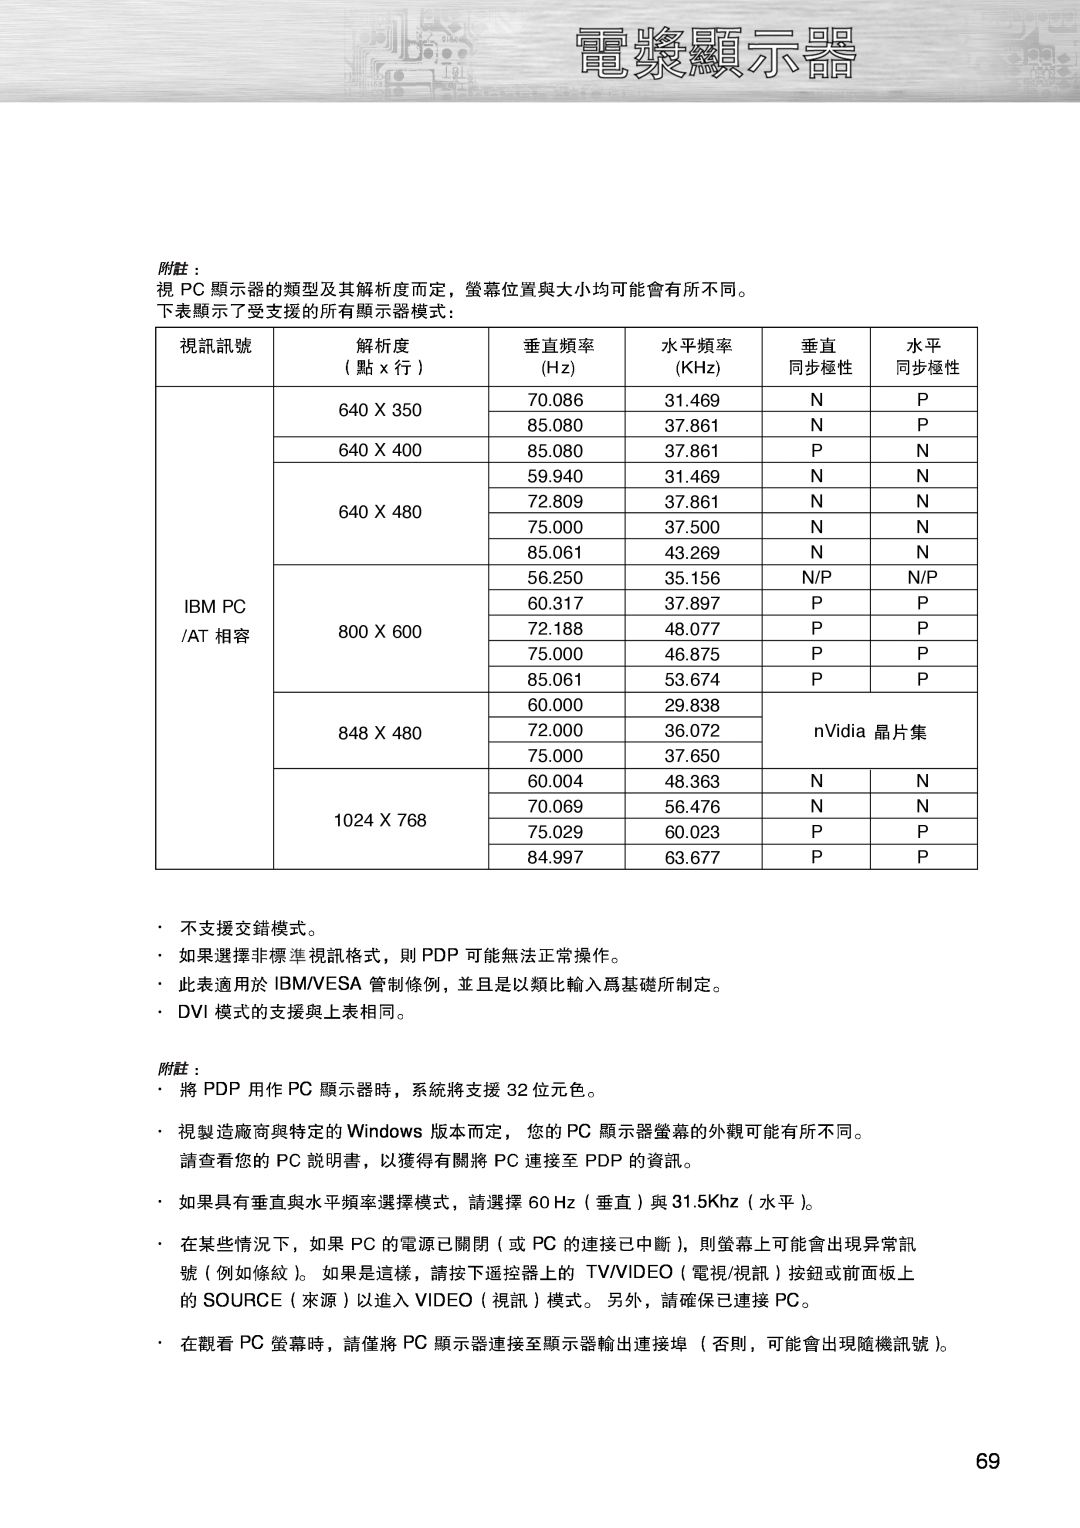 Samsung PL-42D4S manual 640 X 